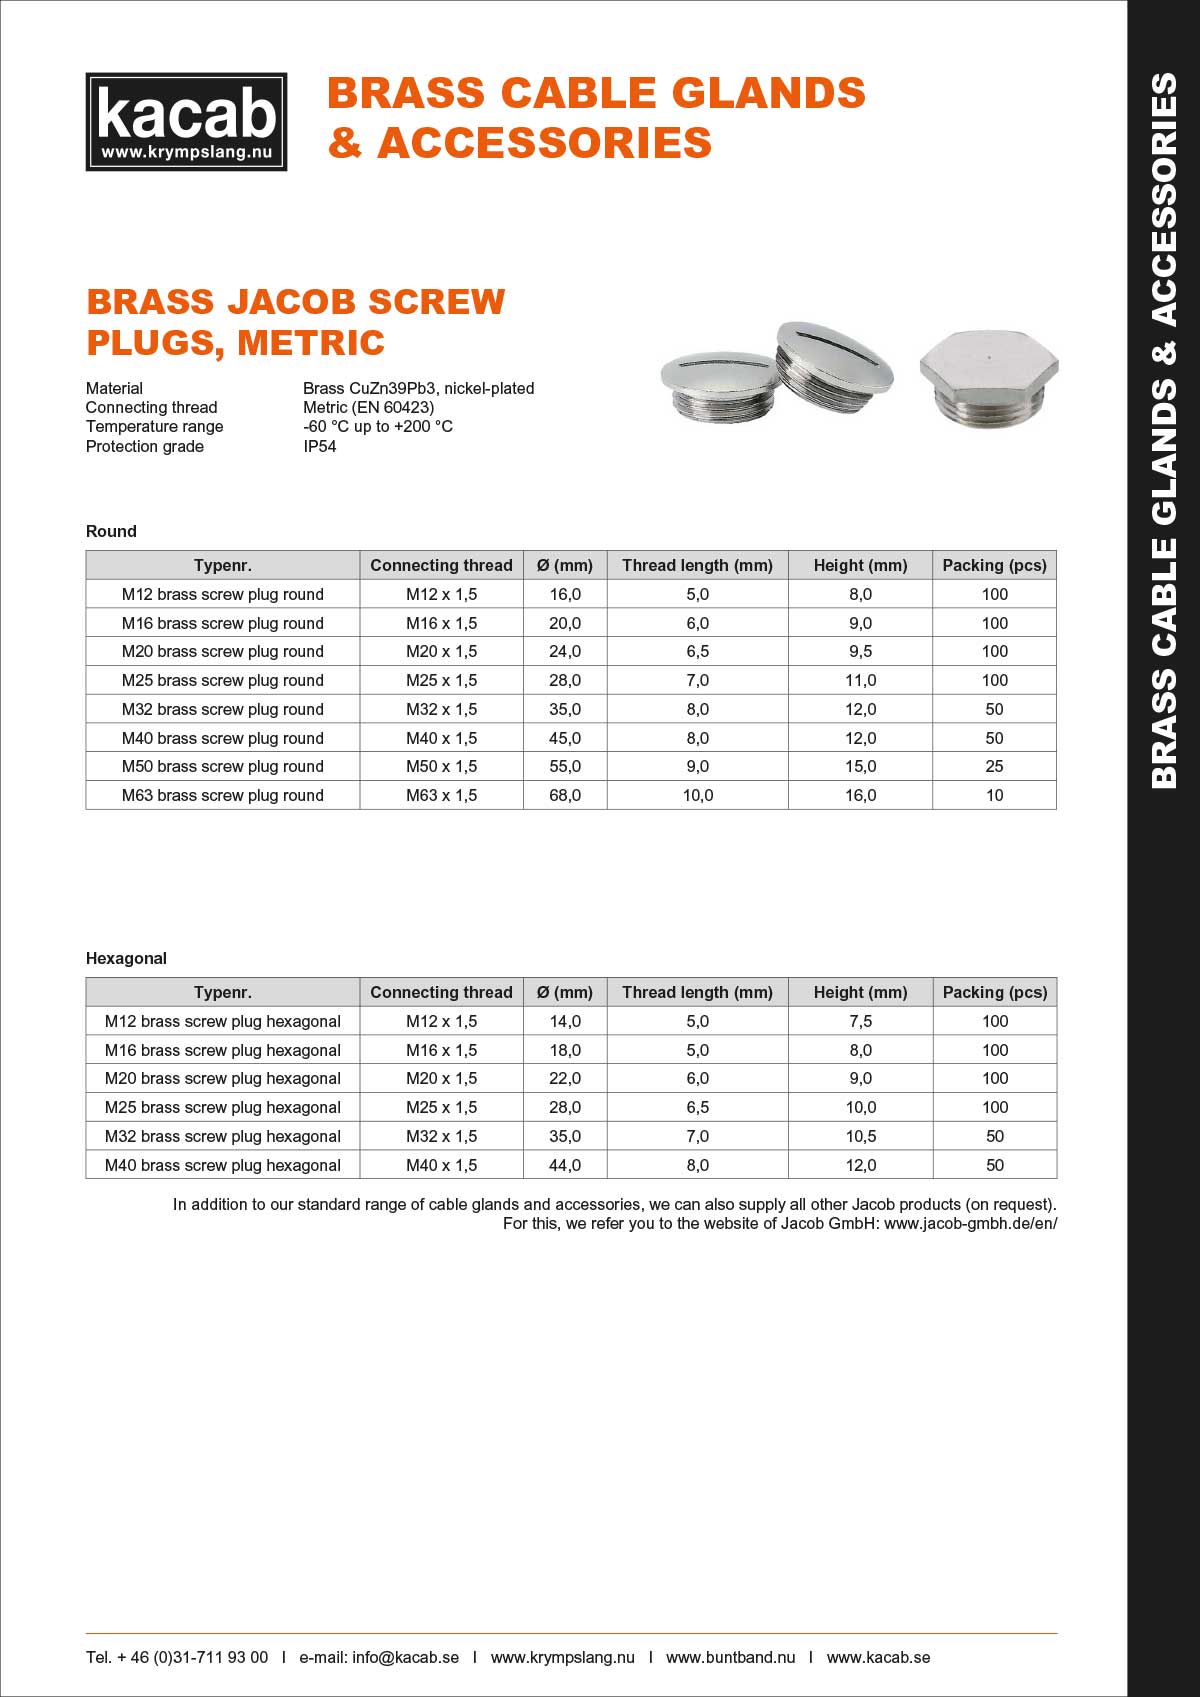 Brass Jacob screw plugs - Metric